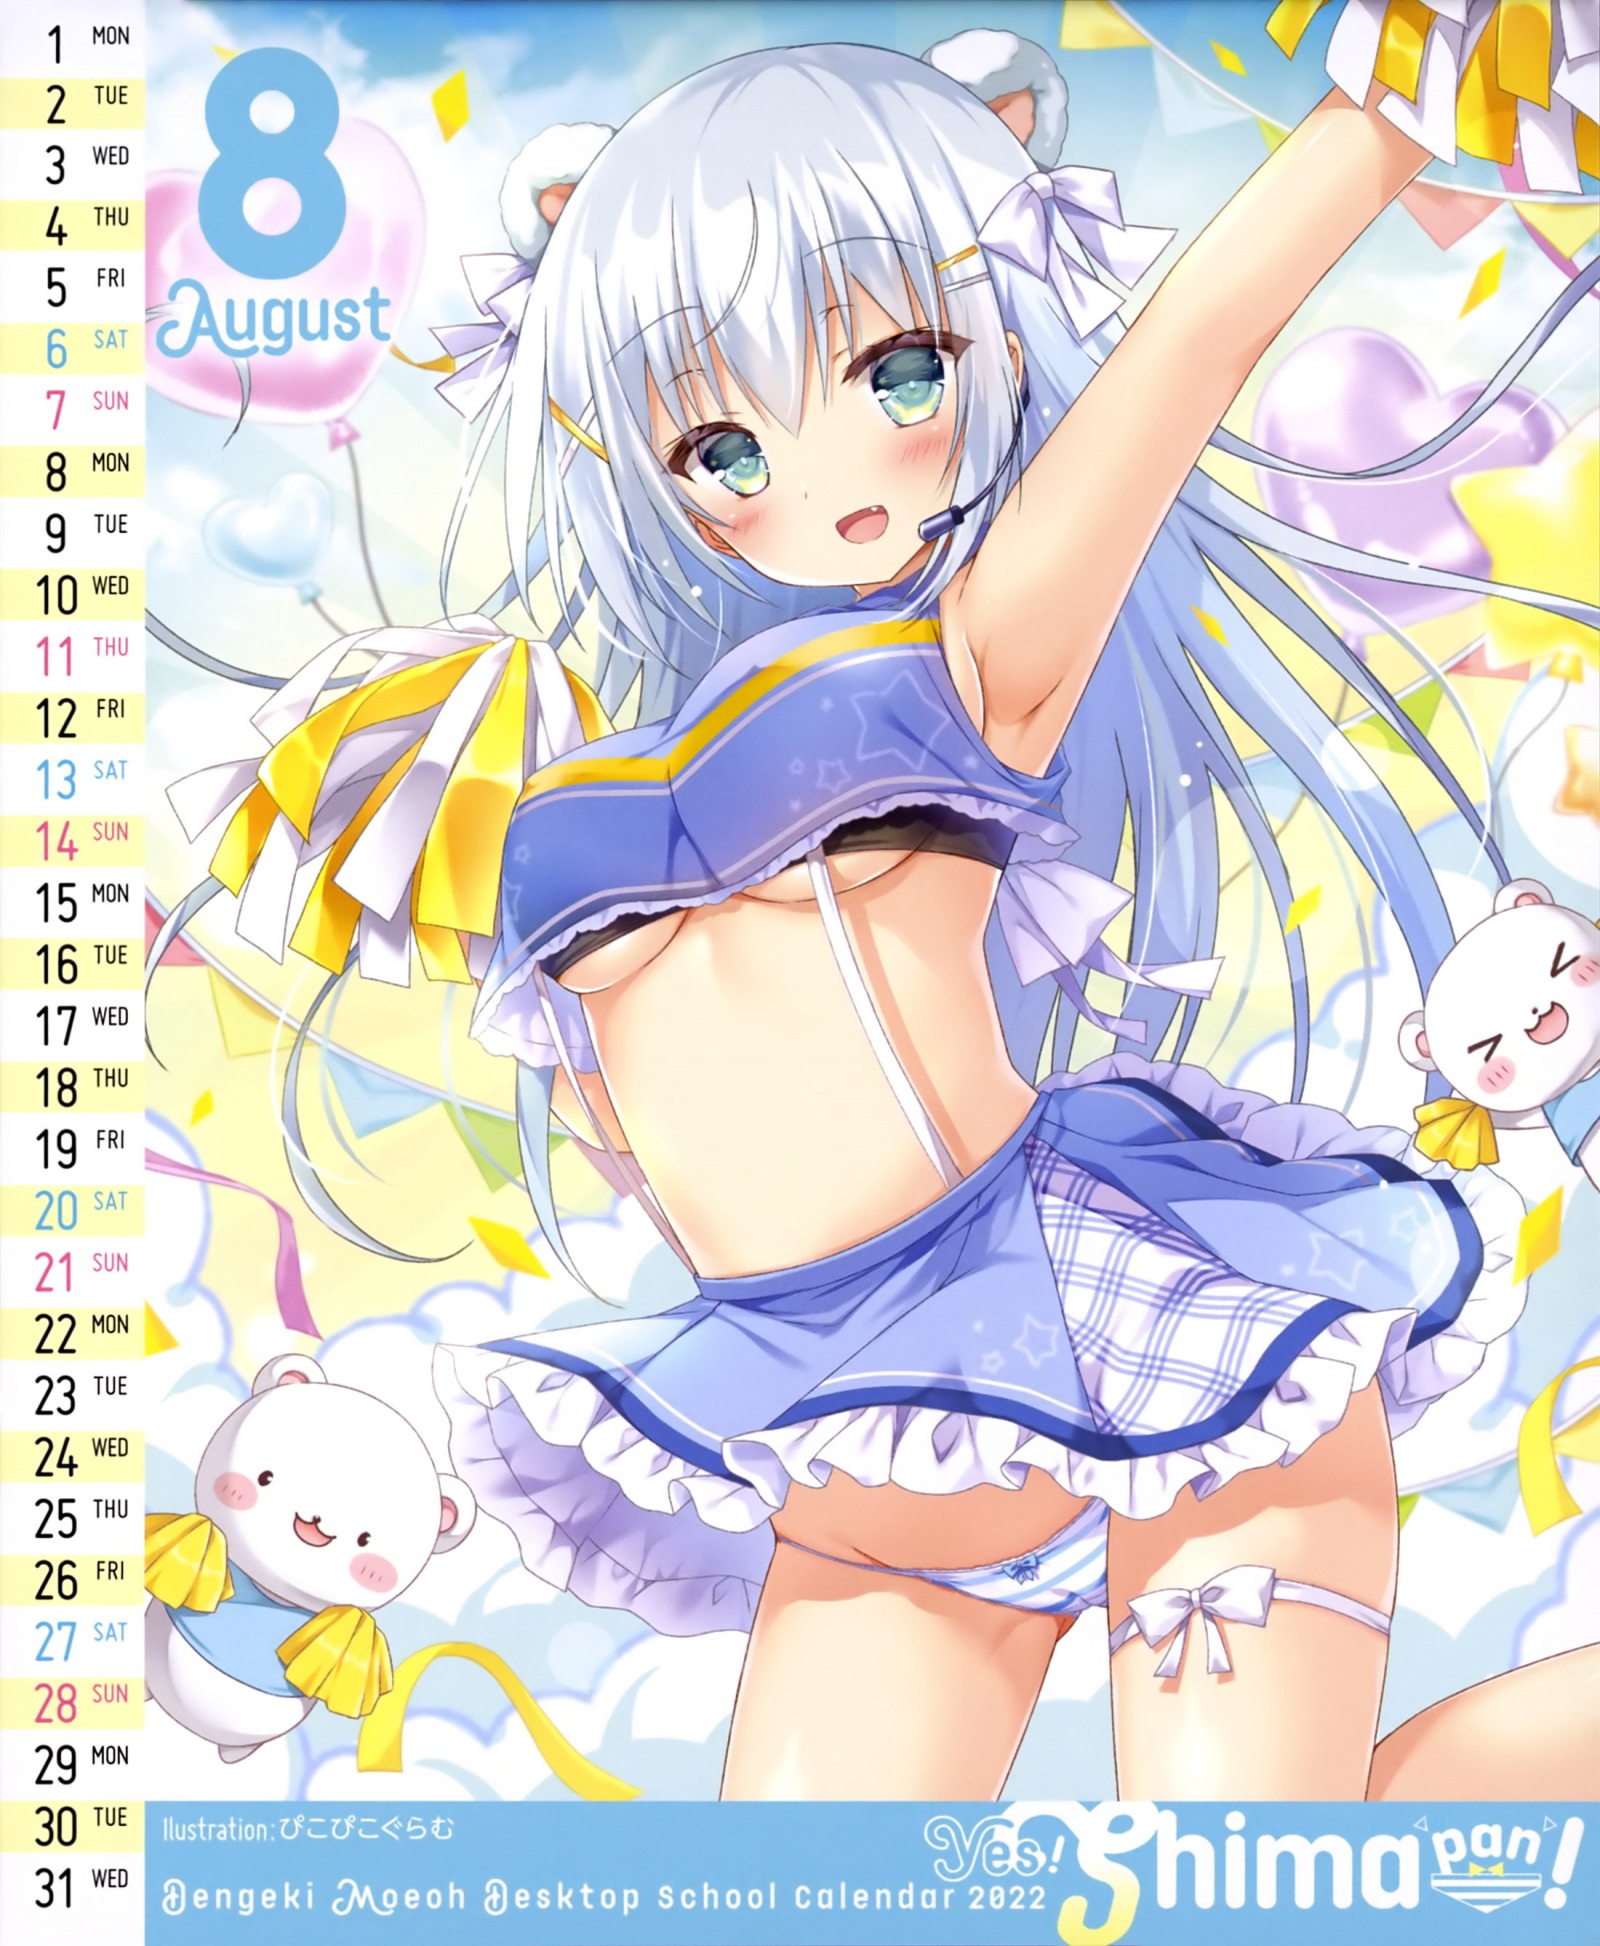  Dengeki Moeoh Desktop School Calendar 2022 Yes! Shima pan! [P9]